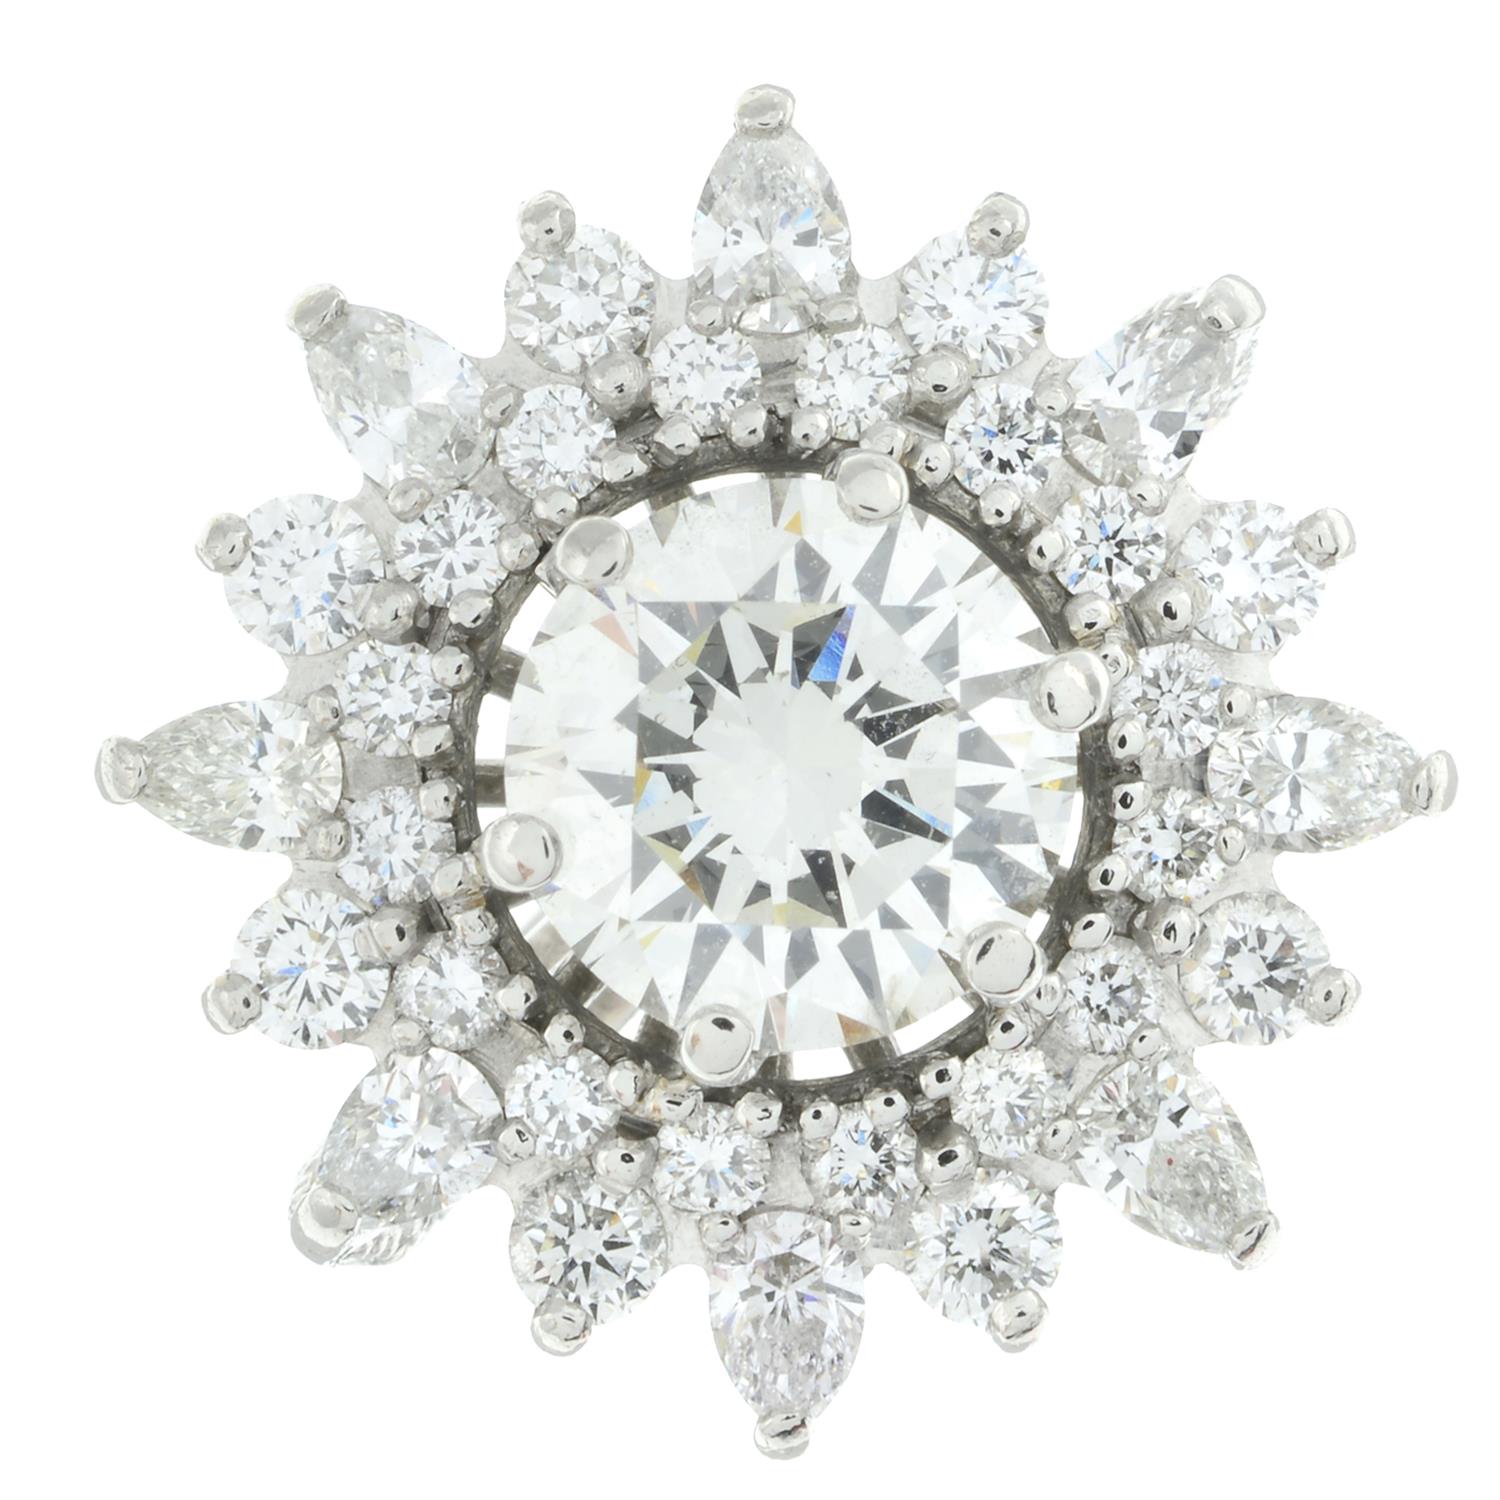 Platinum diamond floral dress ring - Image 2 of 6